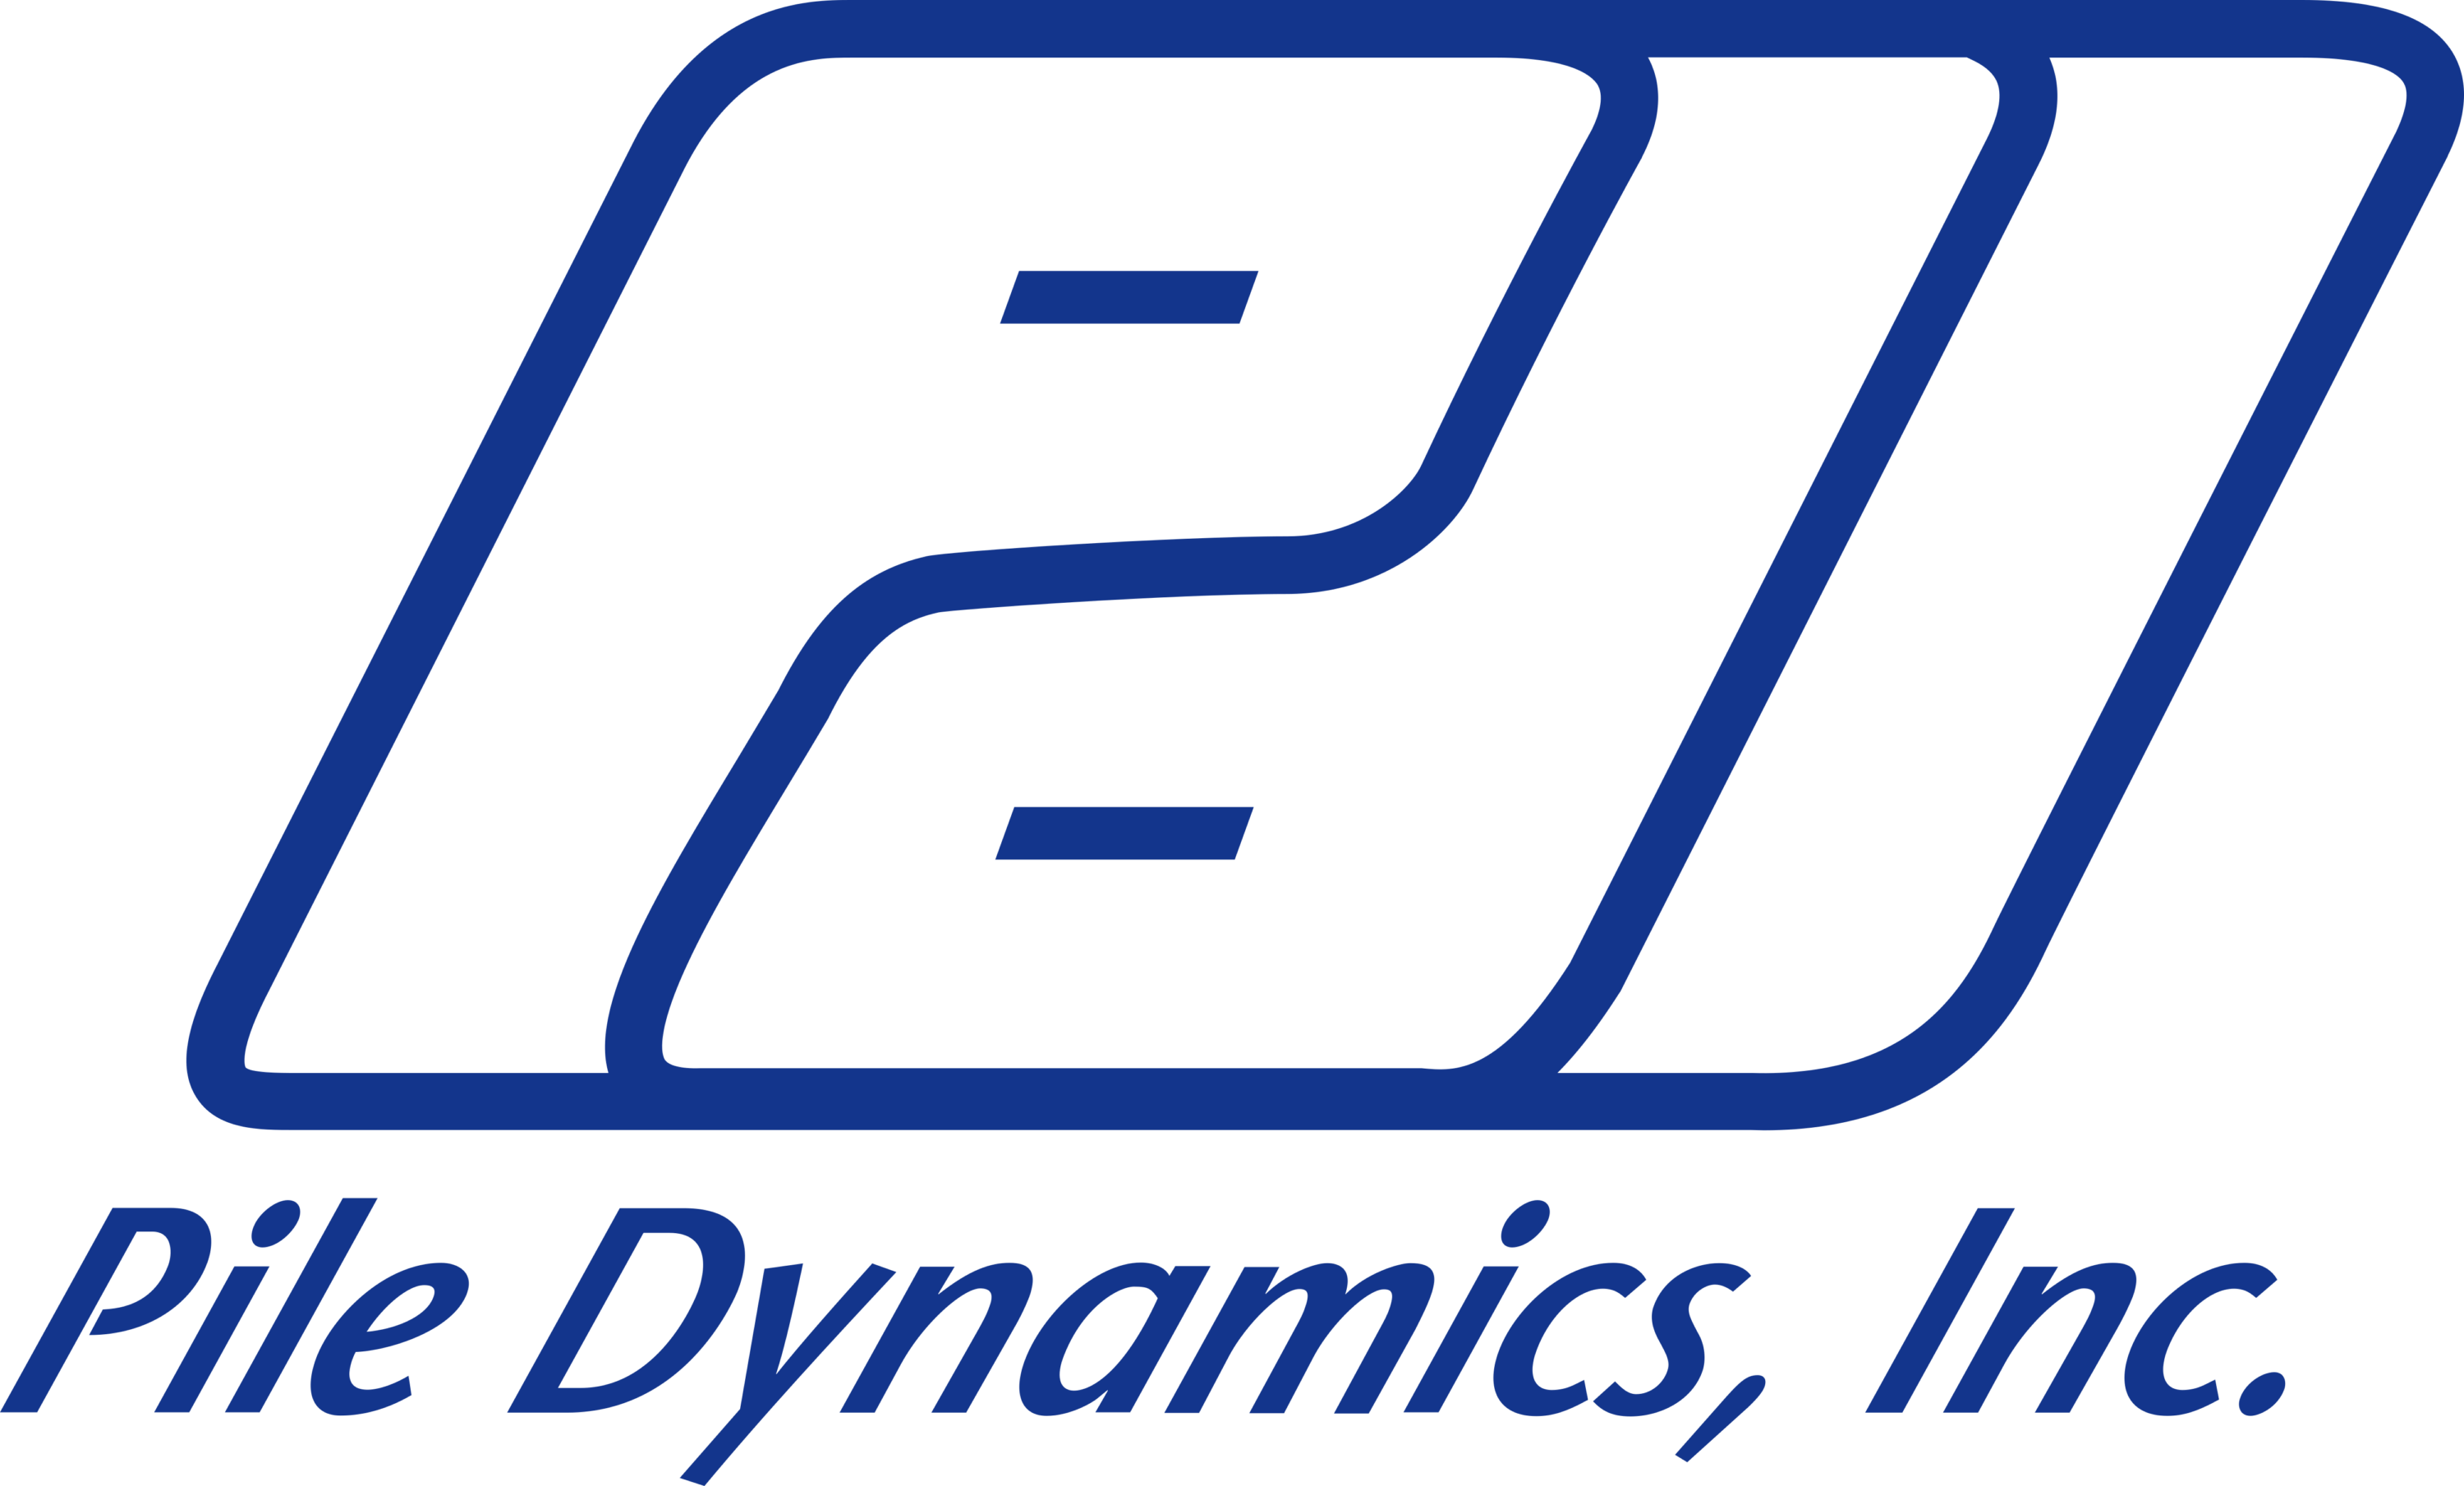 Pile Dynamics Inc Logo